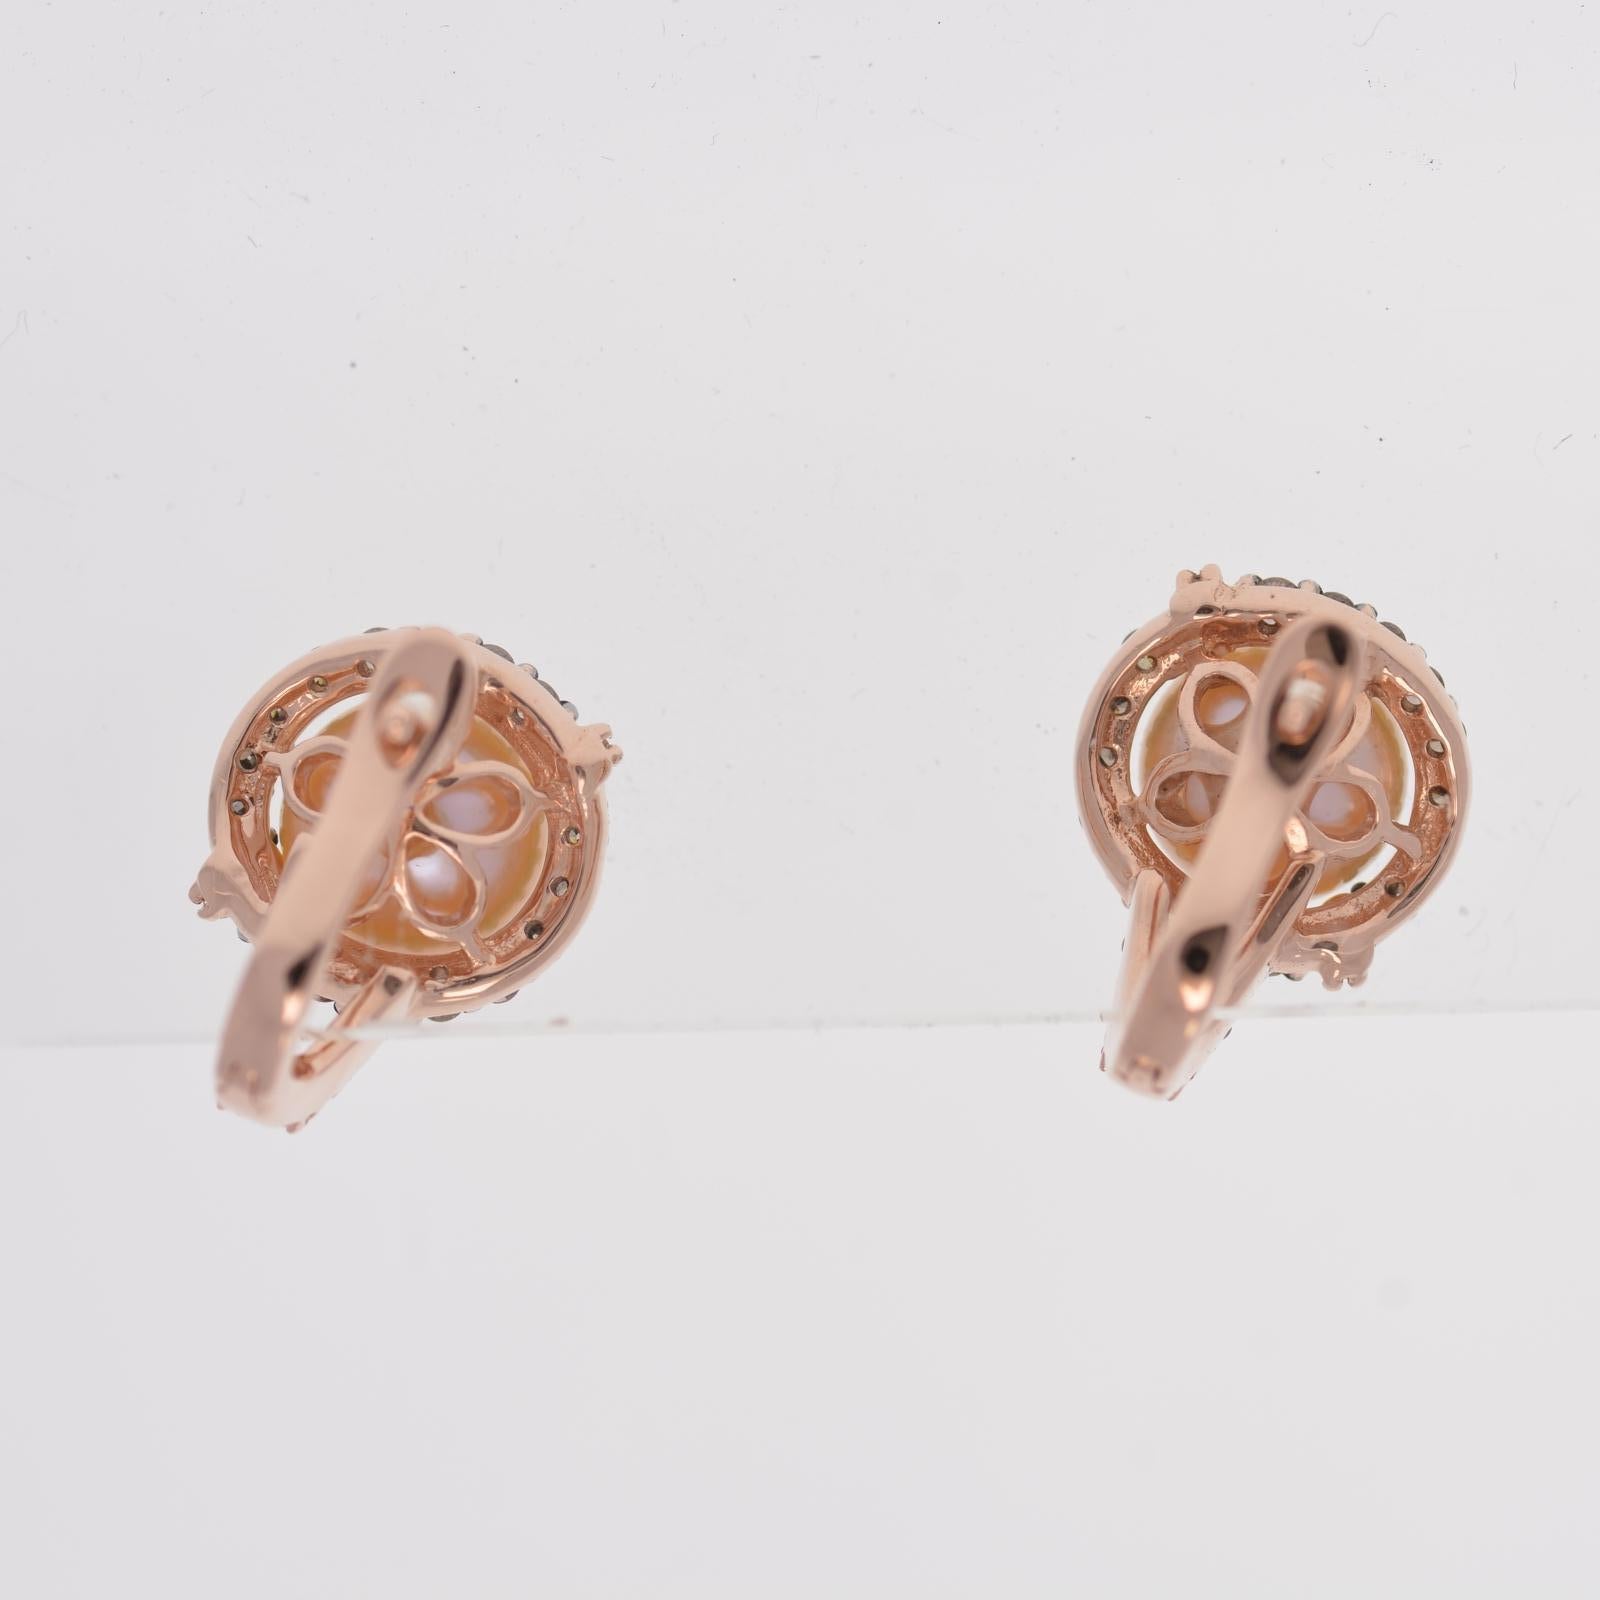 Contemporary Levian Estate Diamond and Pearl 14 Karat Rose Gold Earrings